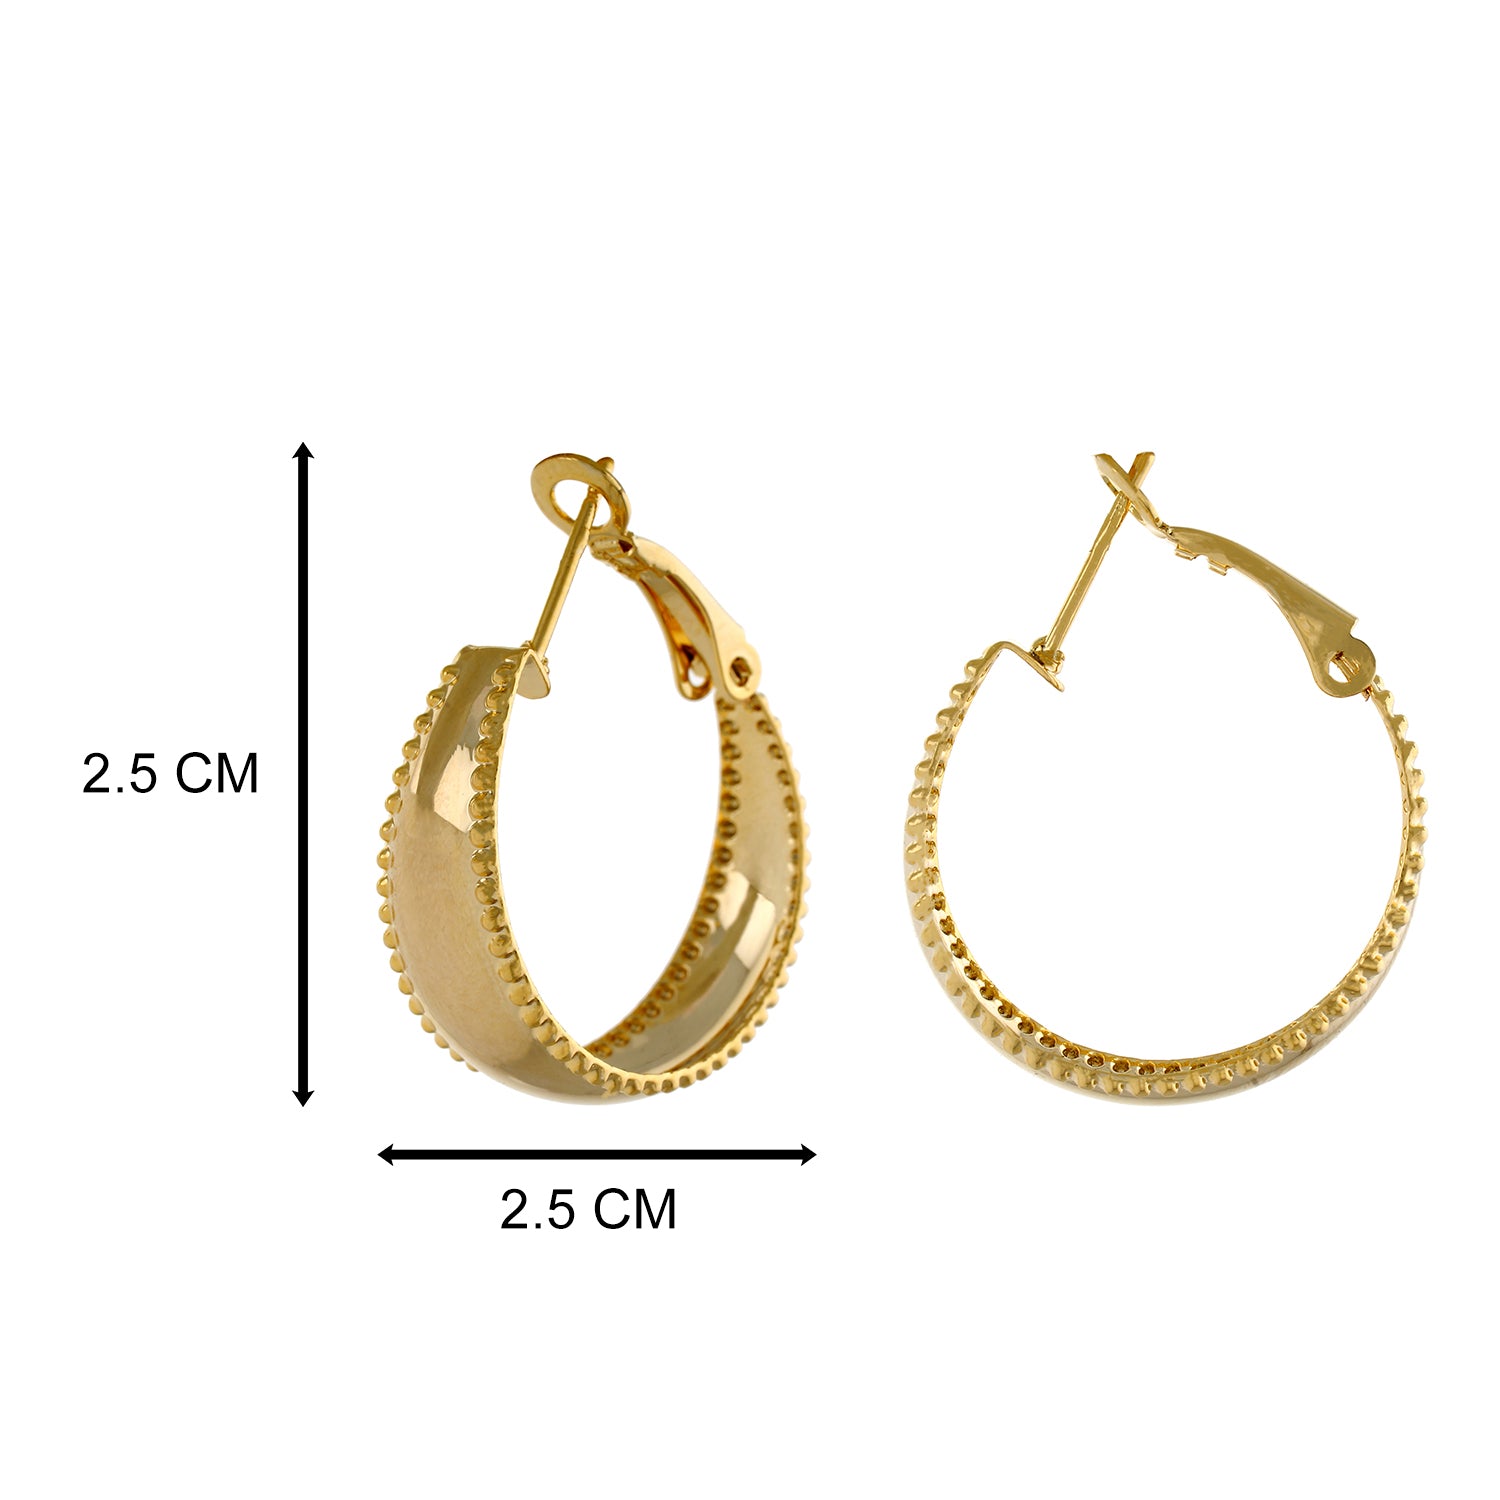 Details 188+ earrings for women gold designs